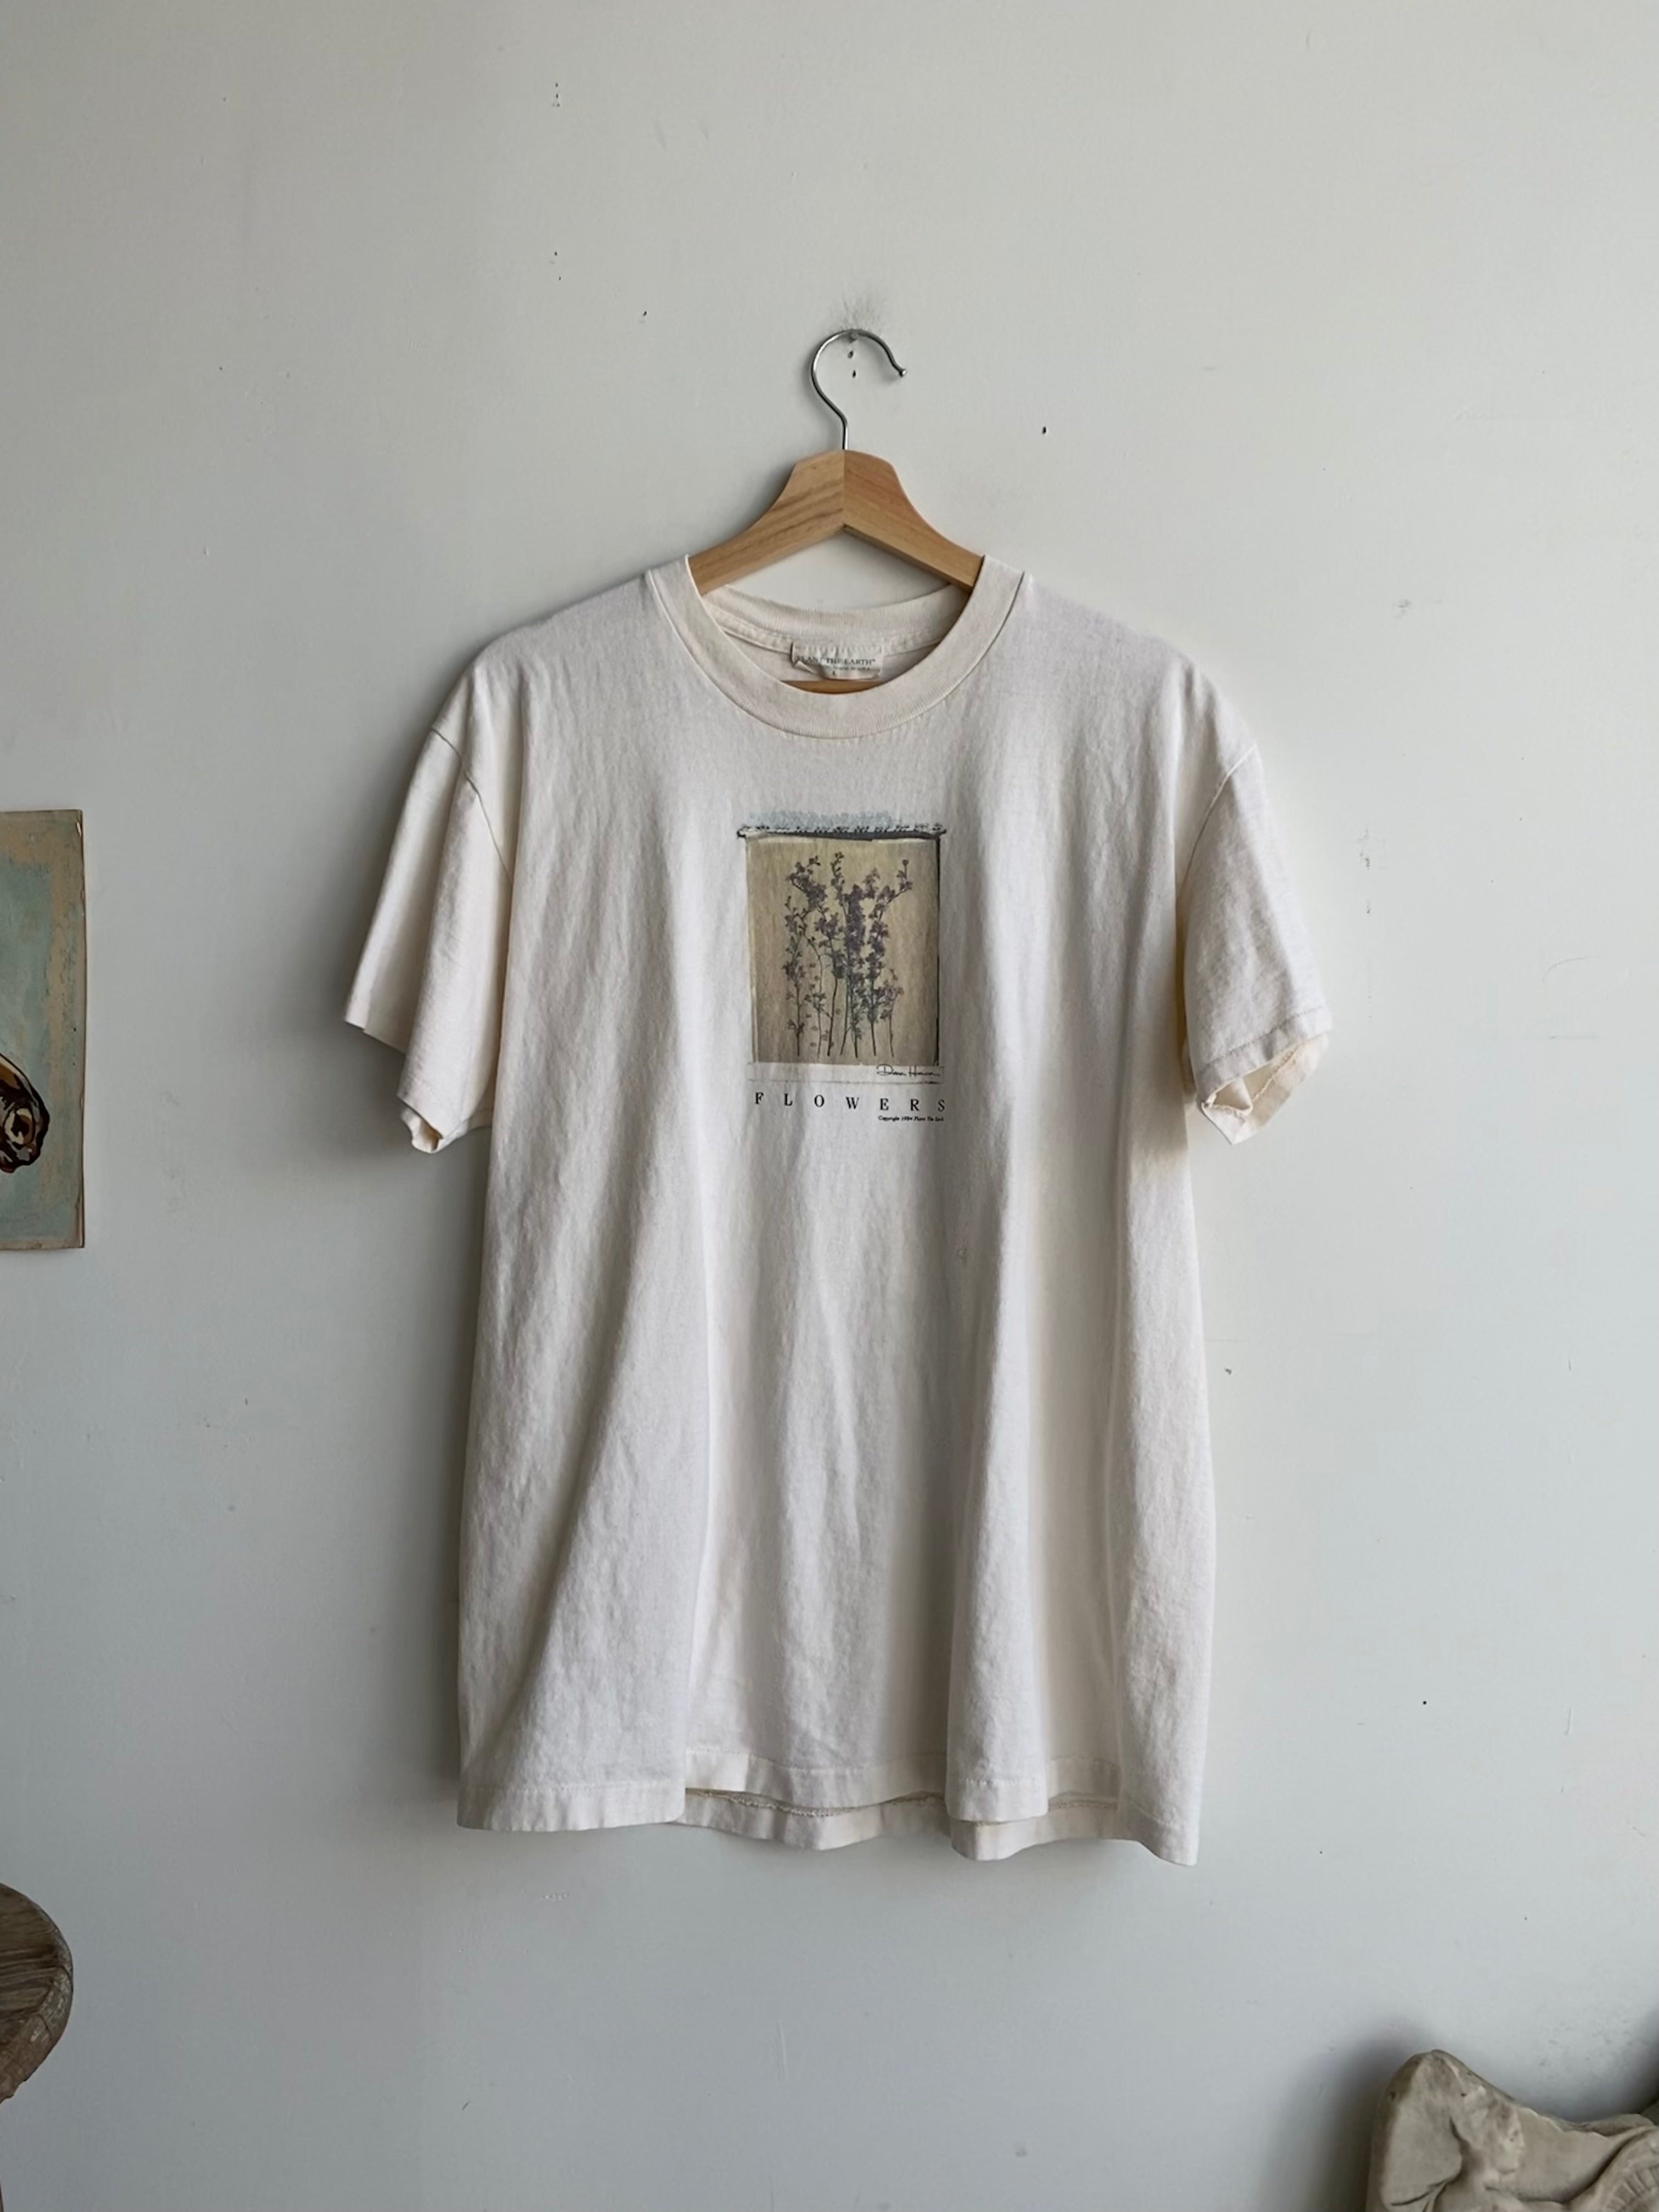 1994 Flowers T-Shirt (L)